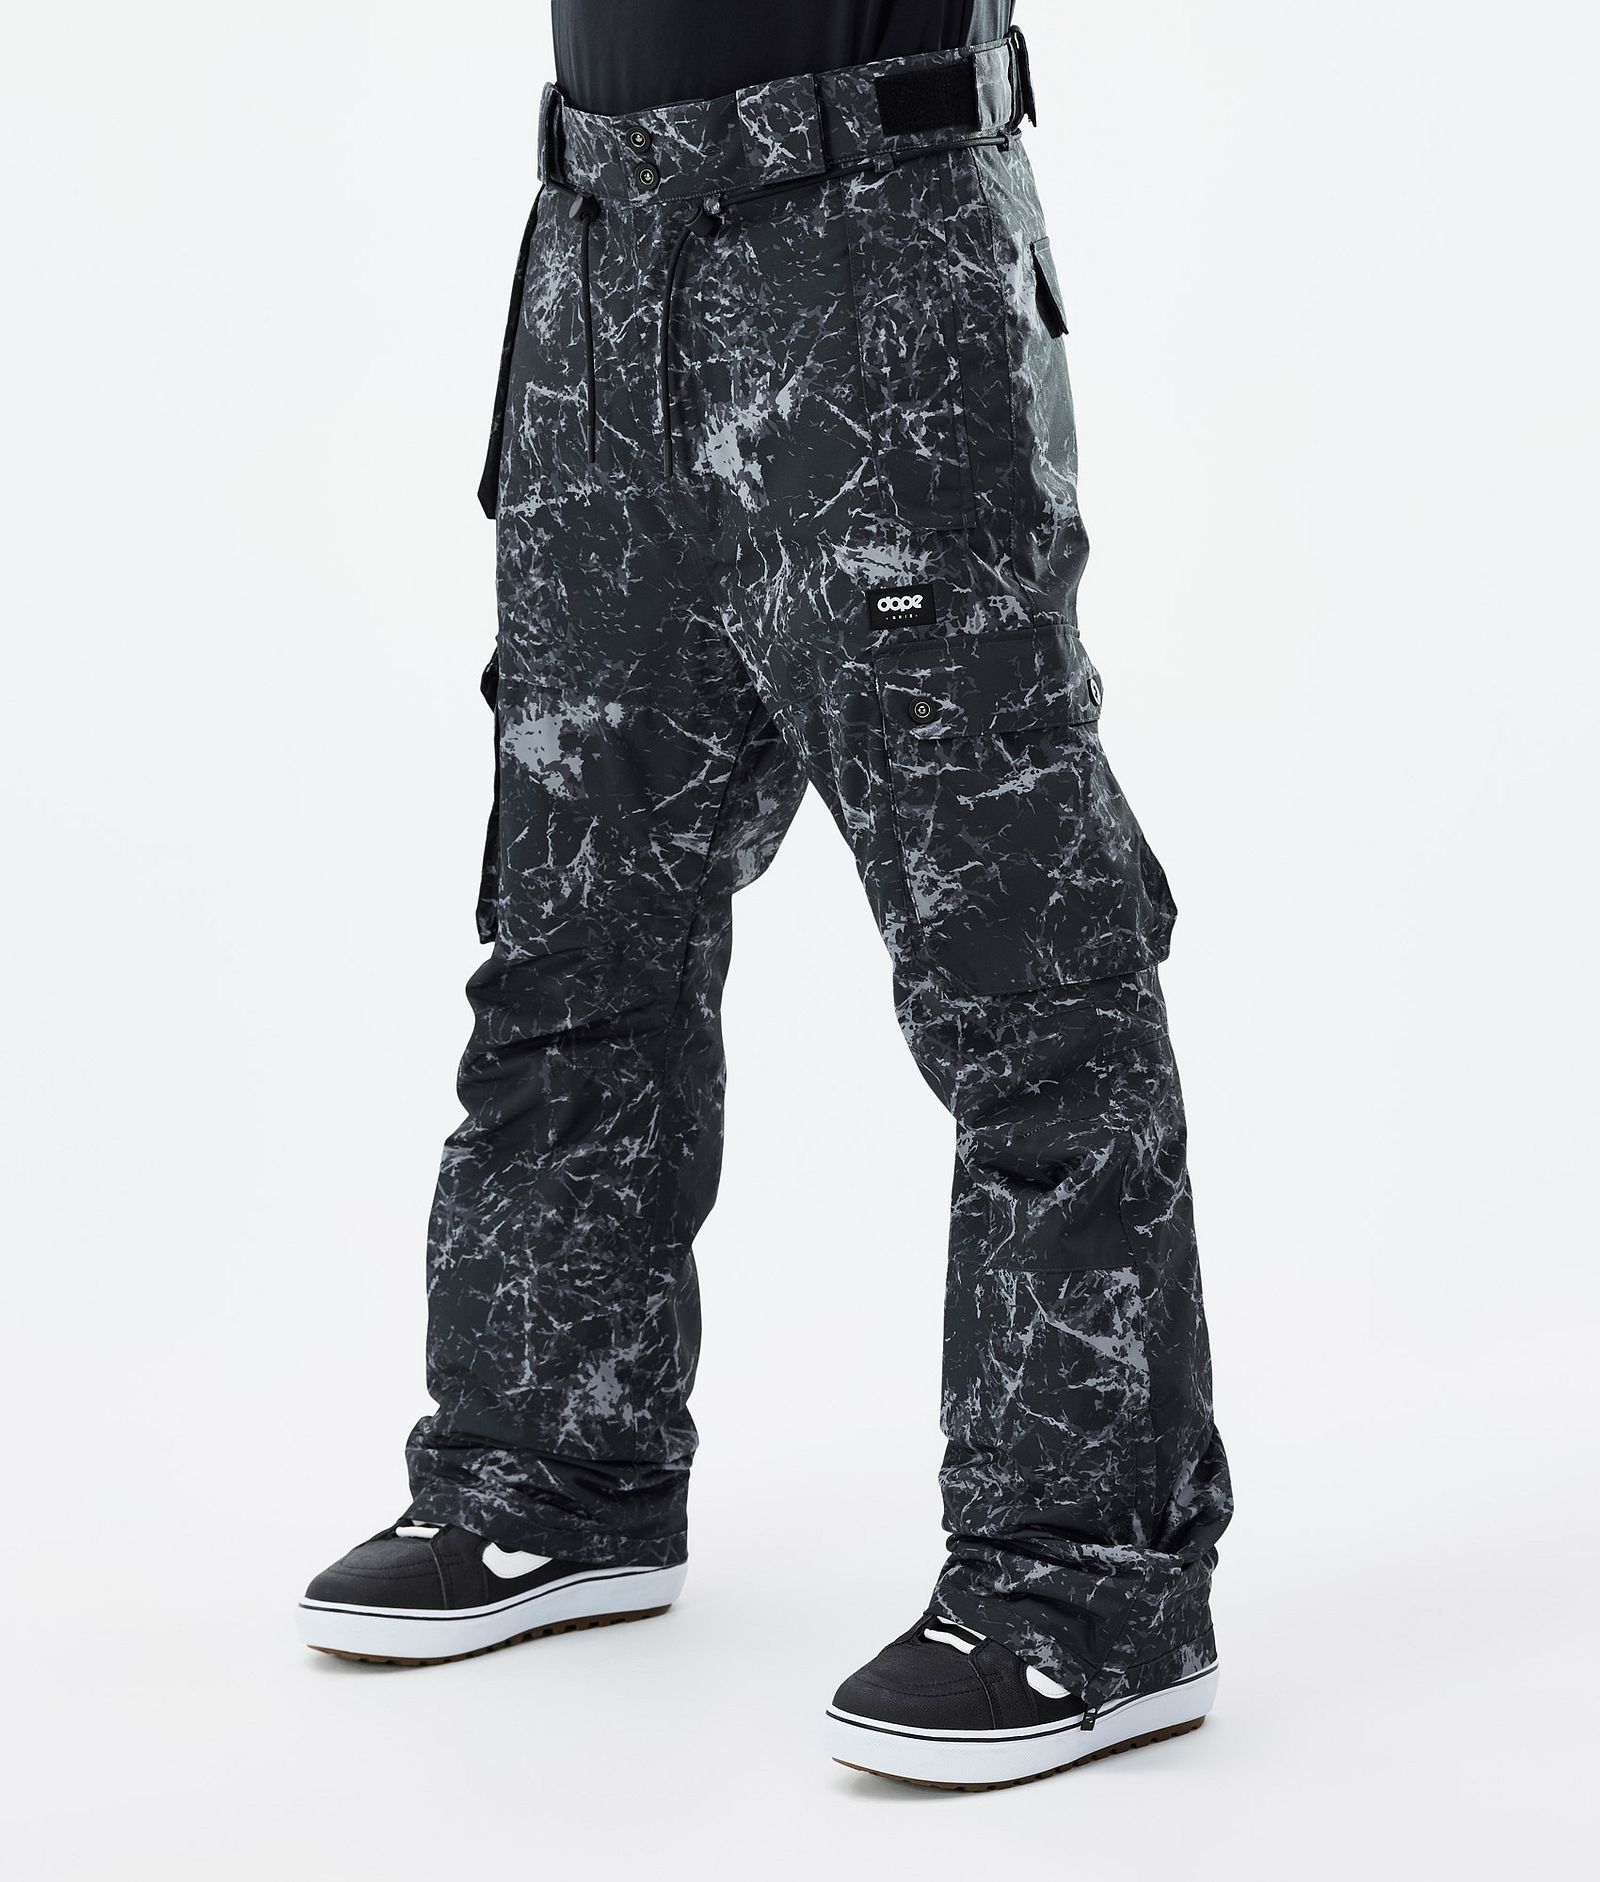 Dope Iconic Pantalones Snowboard Hombre Rock Black - Negro